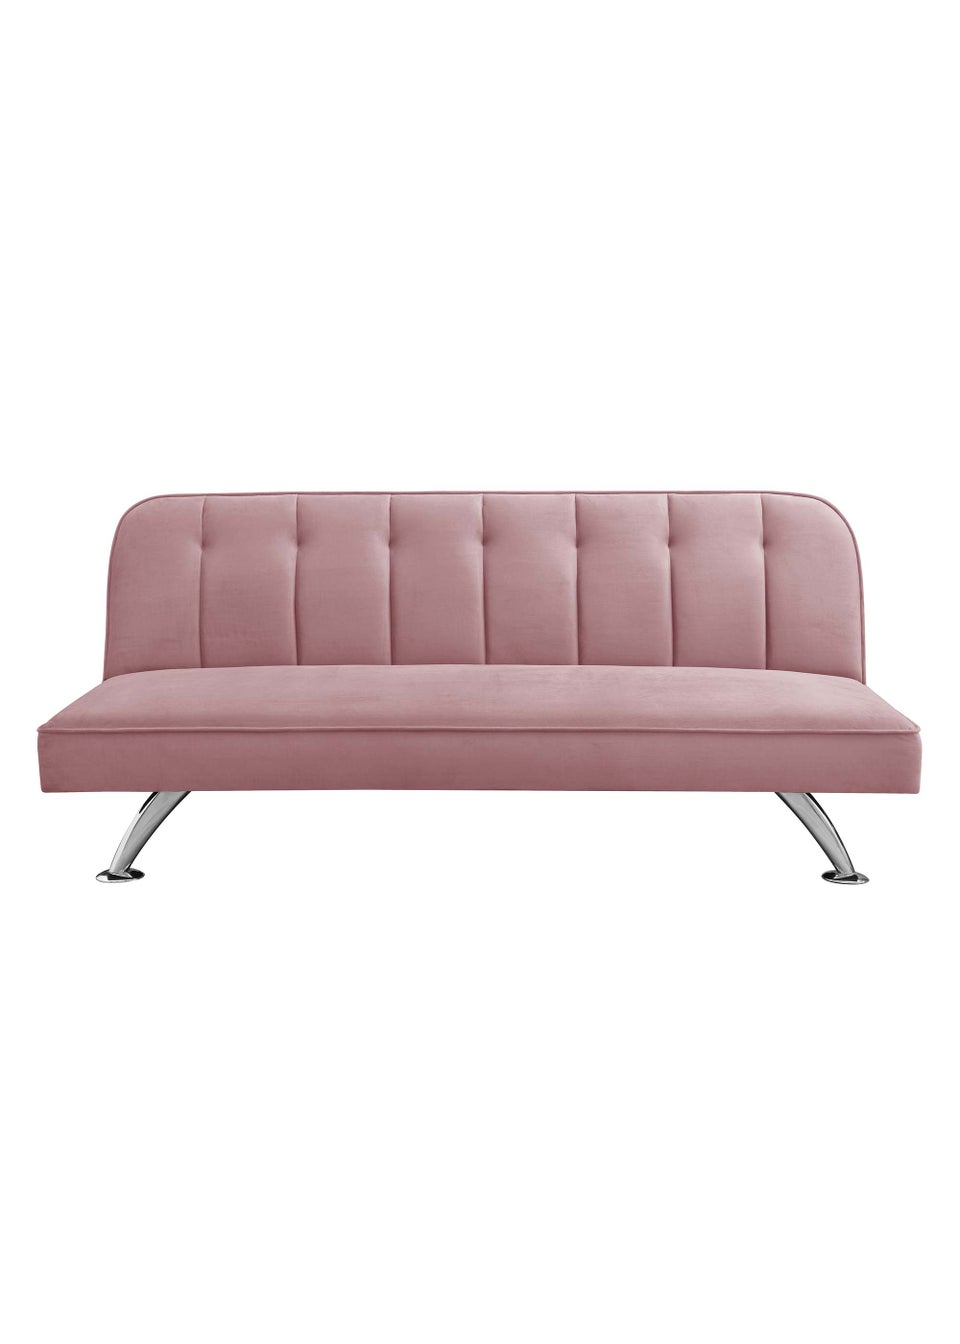 LPD Furniture Brighton Sofa Bed Pink